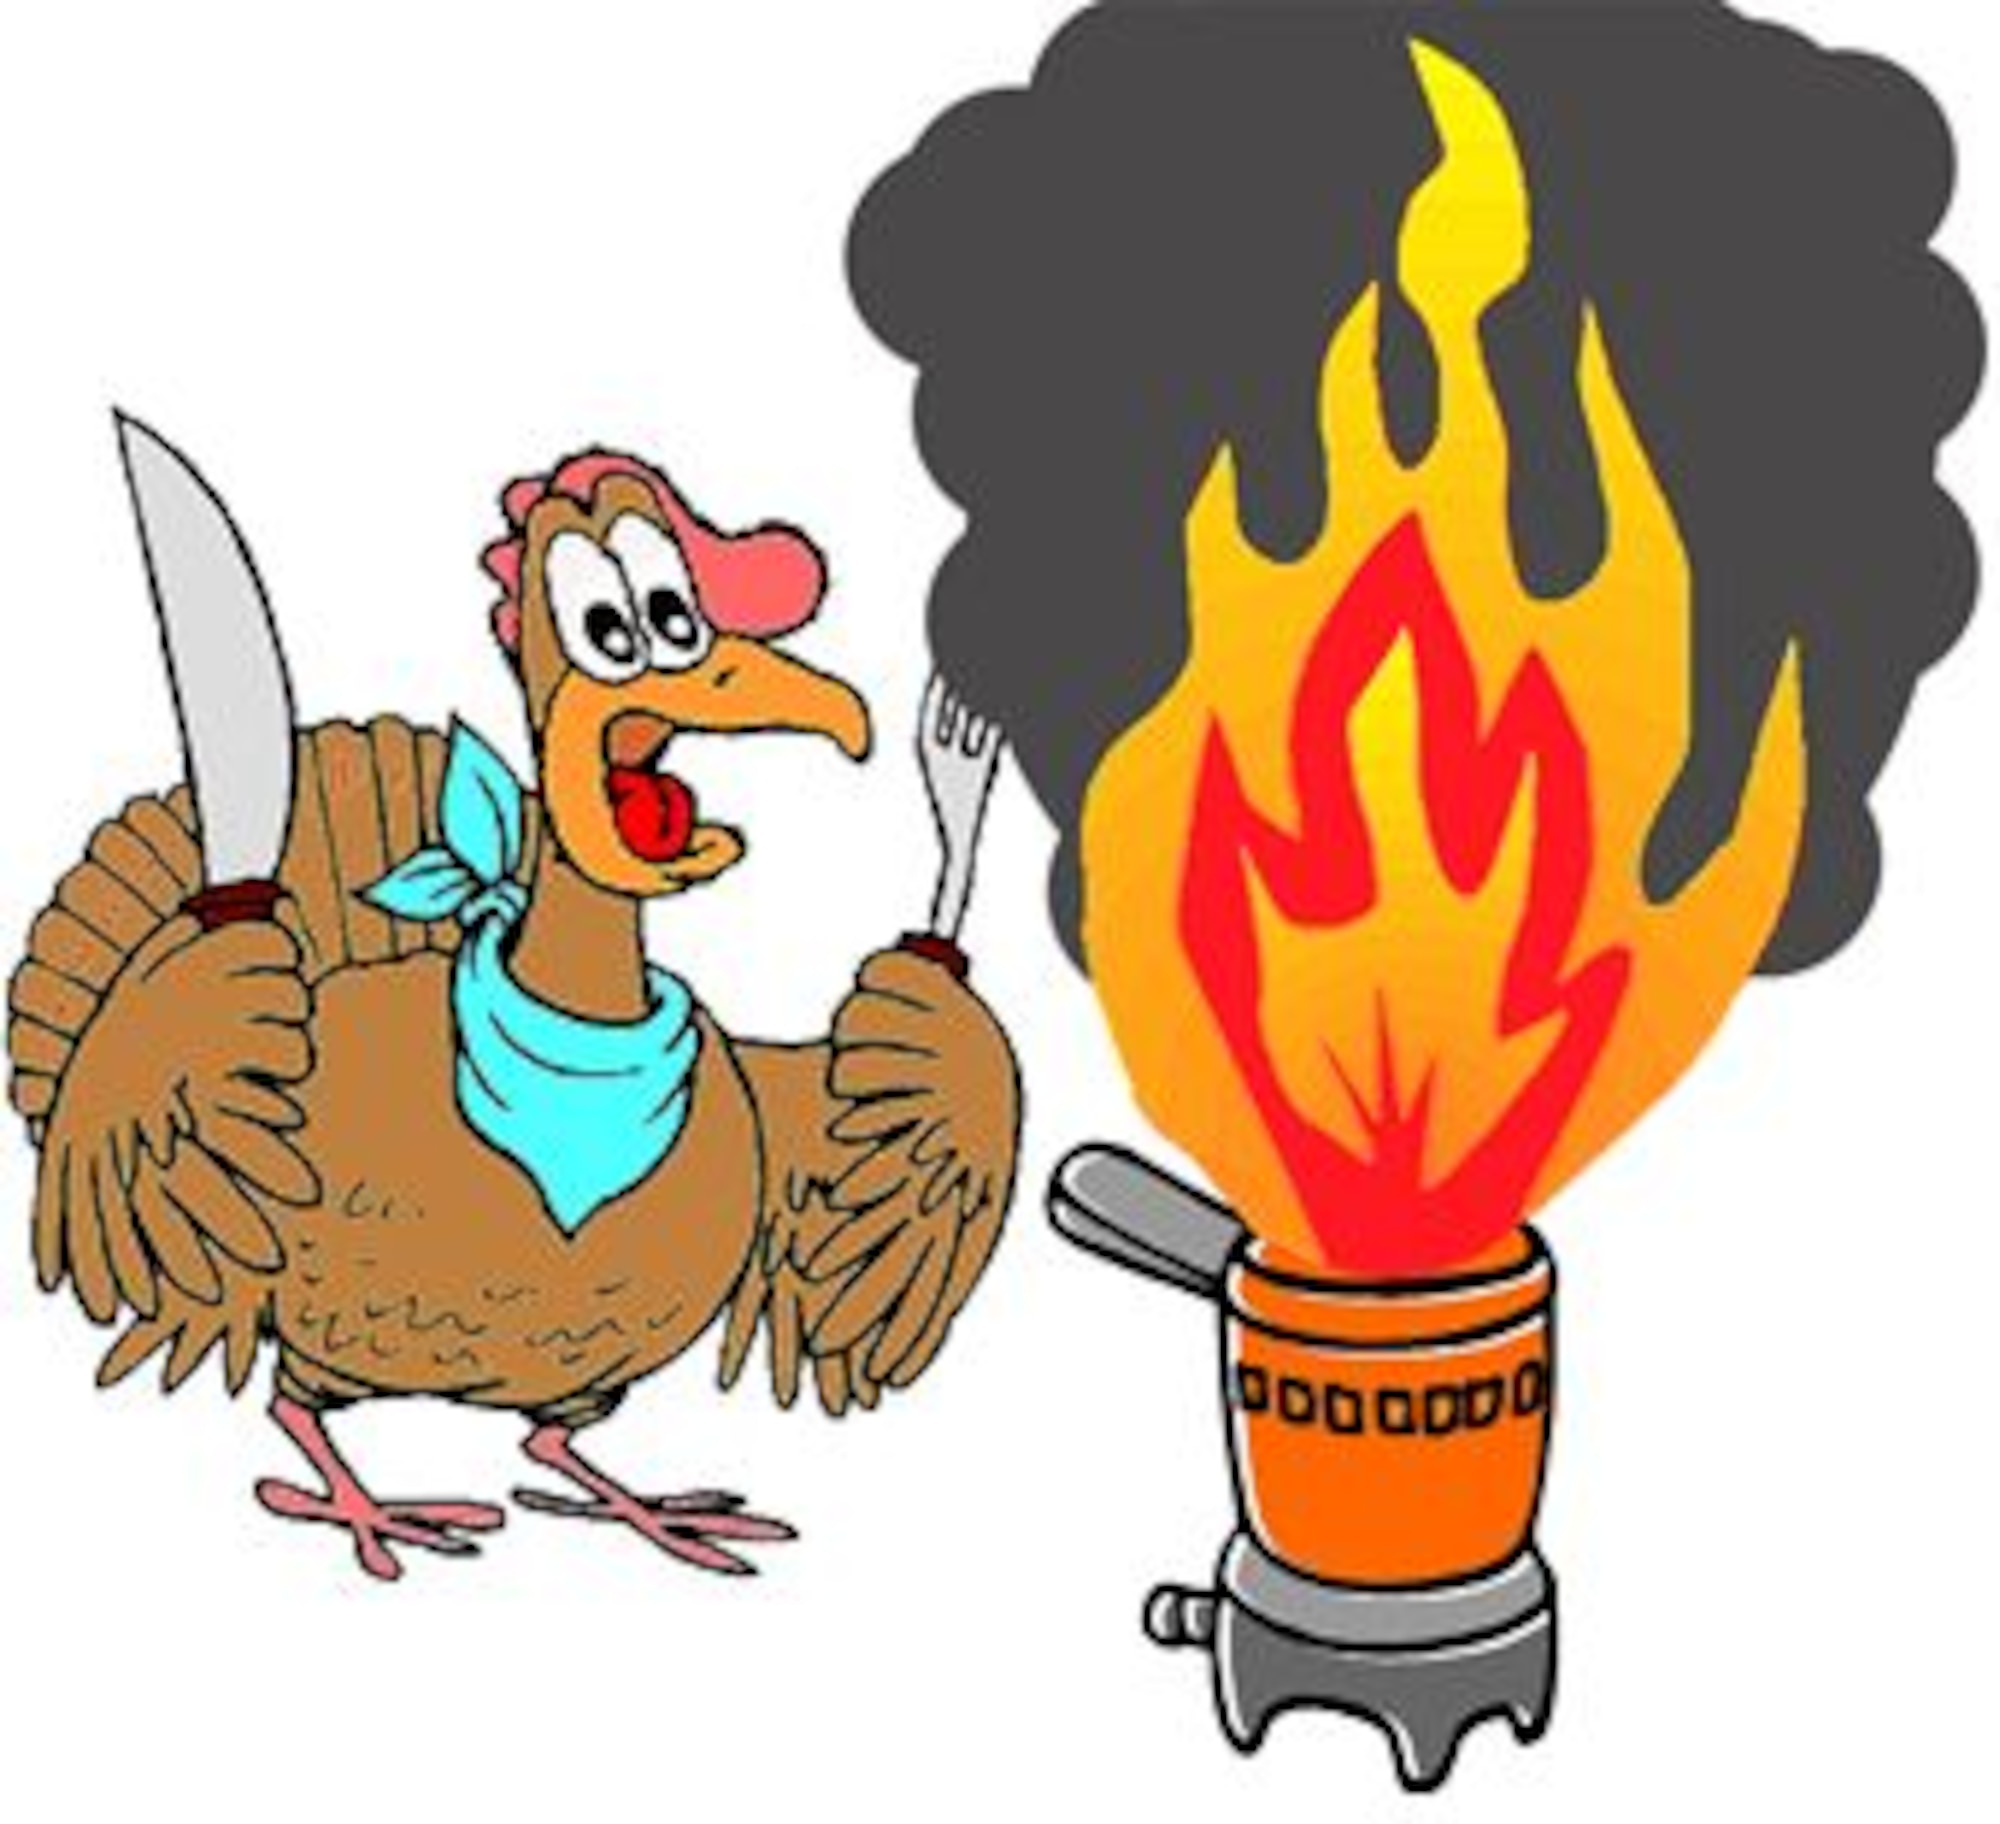 Turkey Fryer Safety (Image by Airman 1st Class Dustin Mullen)